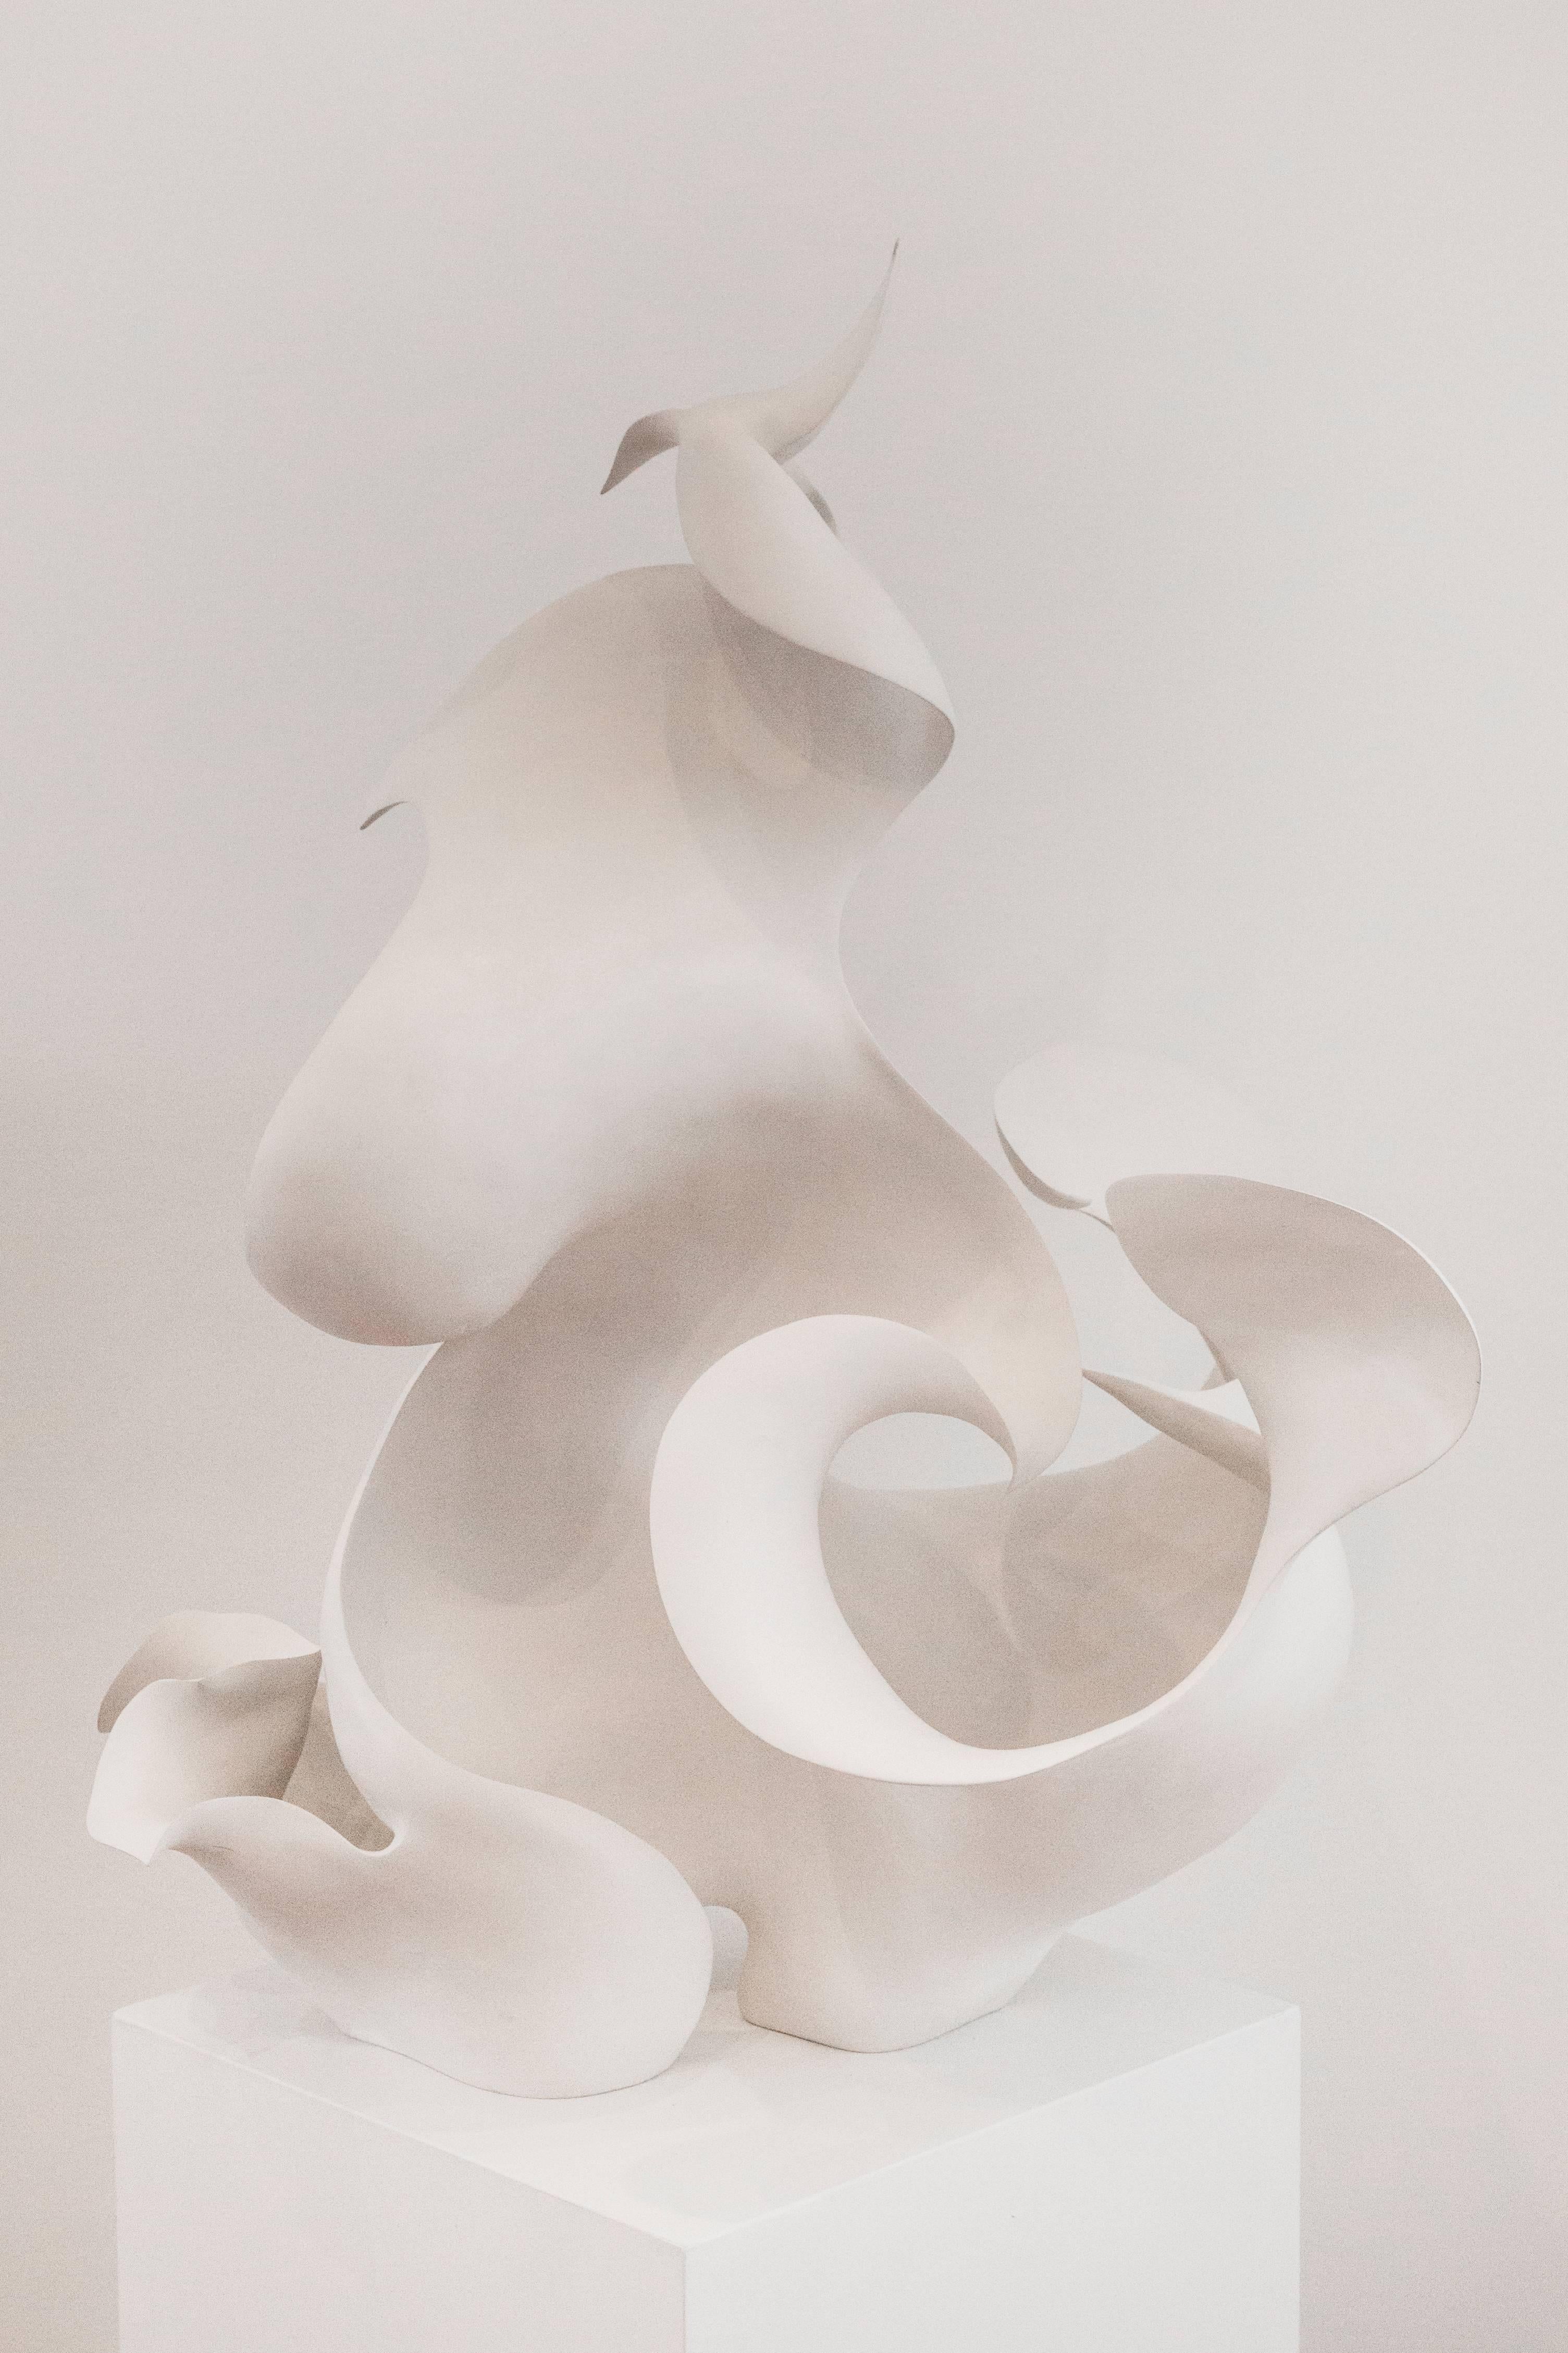 Dendrobium Tobaense - Gray Abstract Sculpture by Astrid Dahl